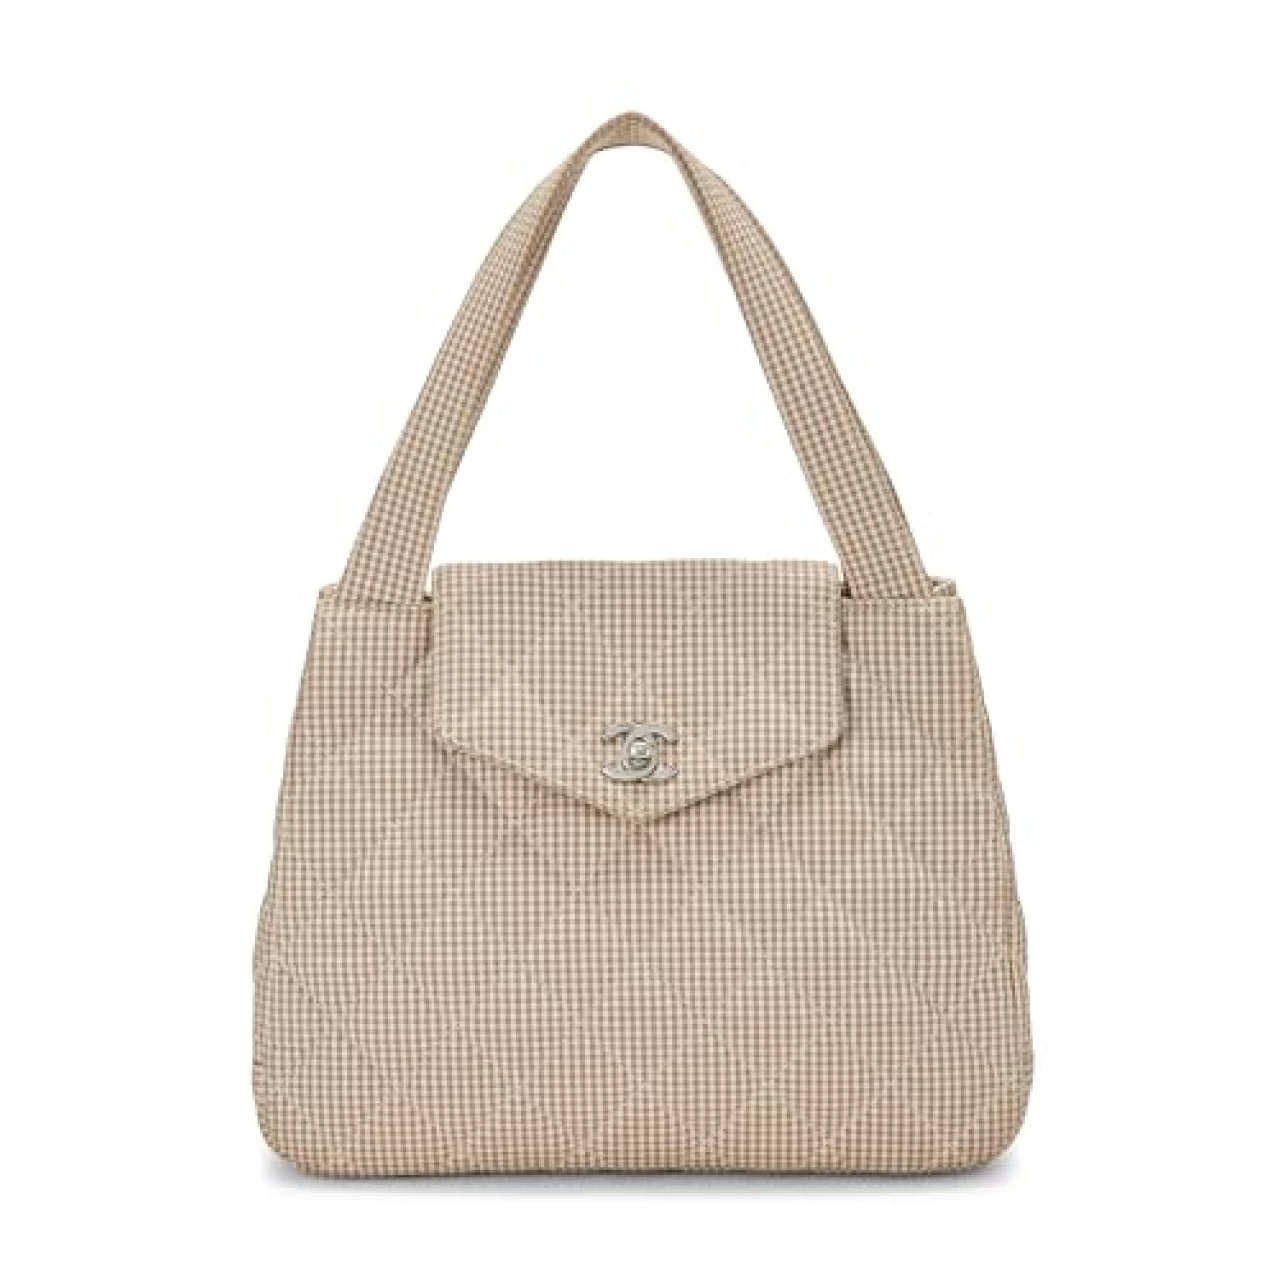 Chanel, Pre-Loved Beige &amp; White Gingham Canvas Handbag, Beige